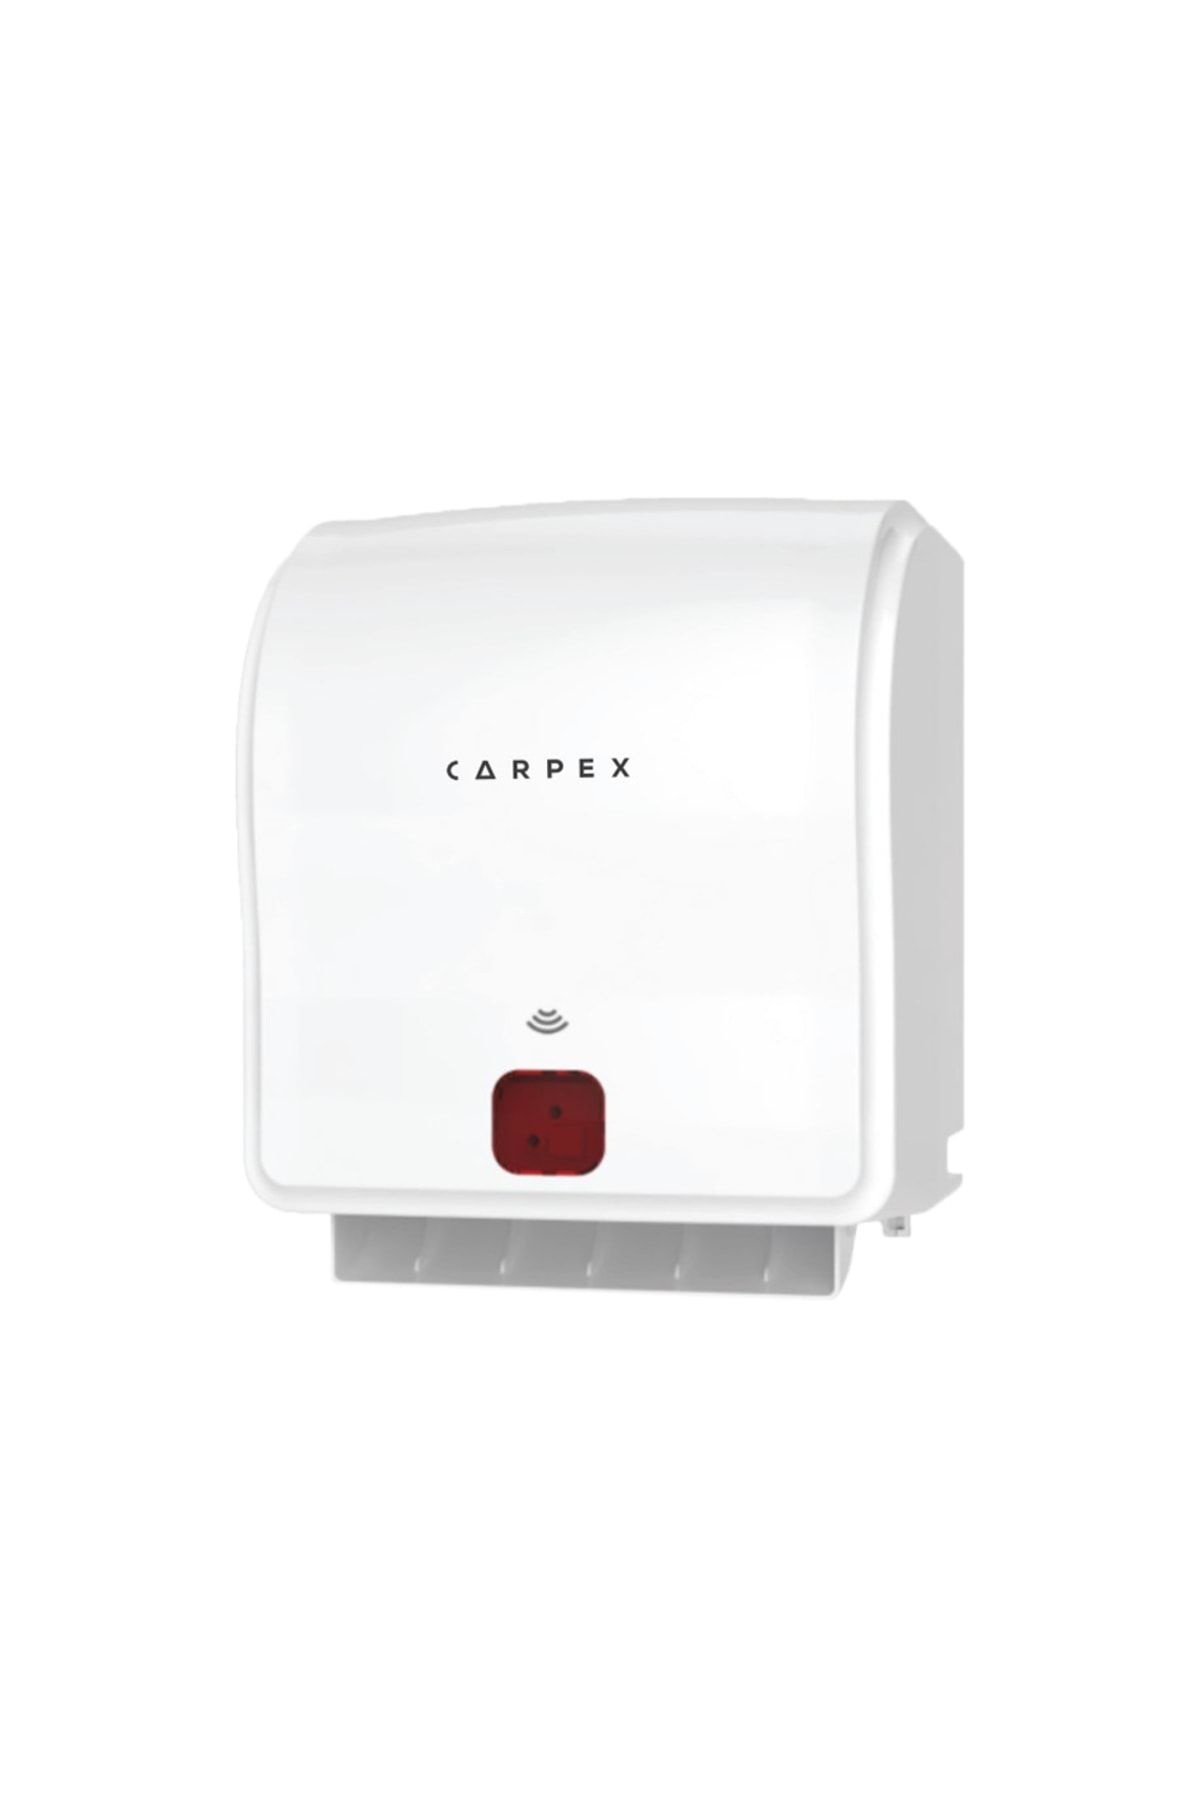 Carpex Optima Otomatik Kağıt Havlu Dispenseri